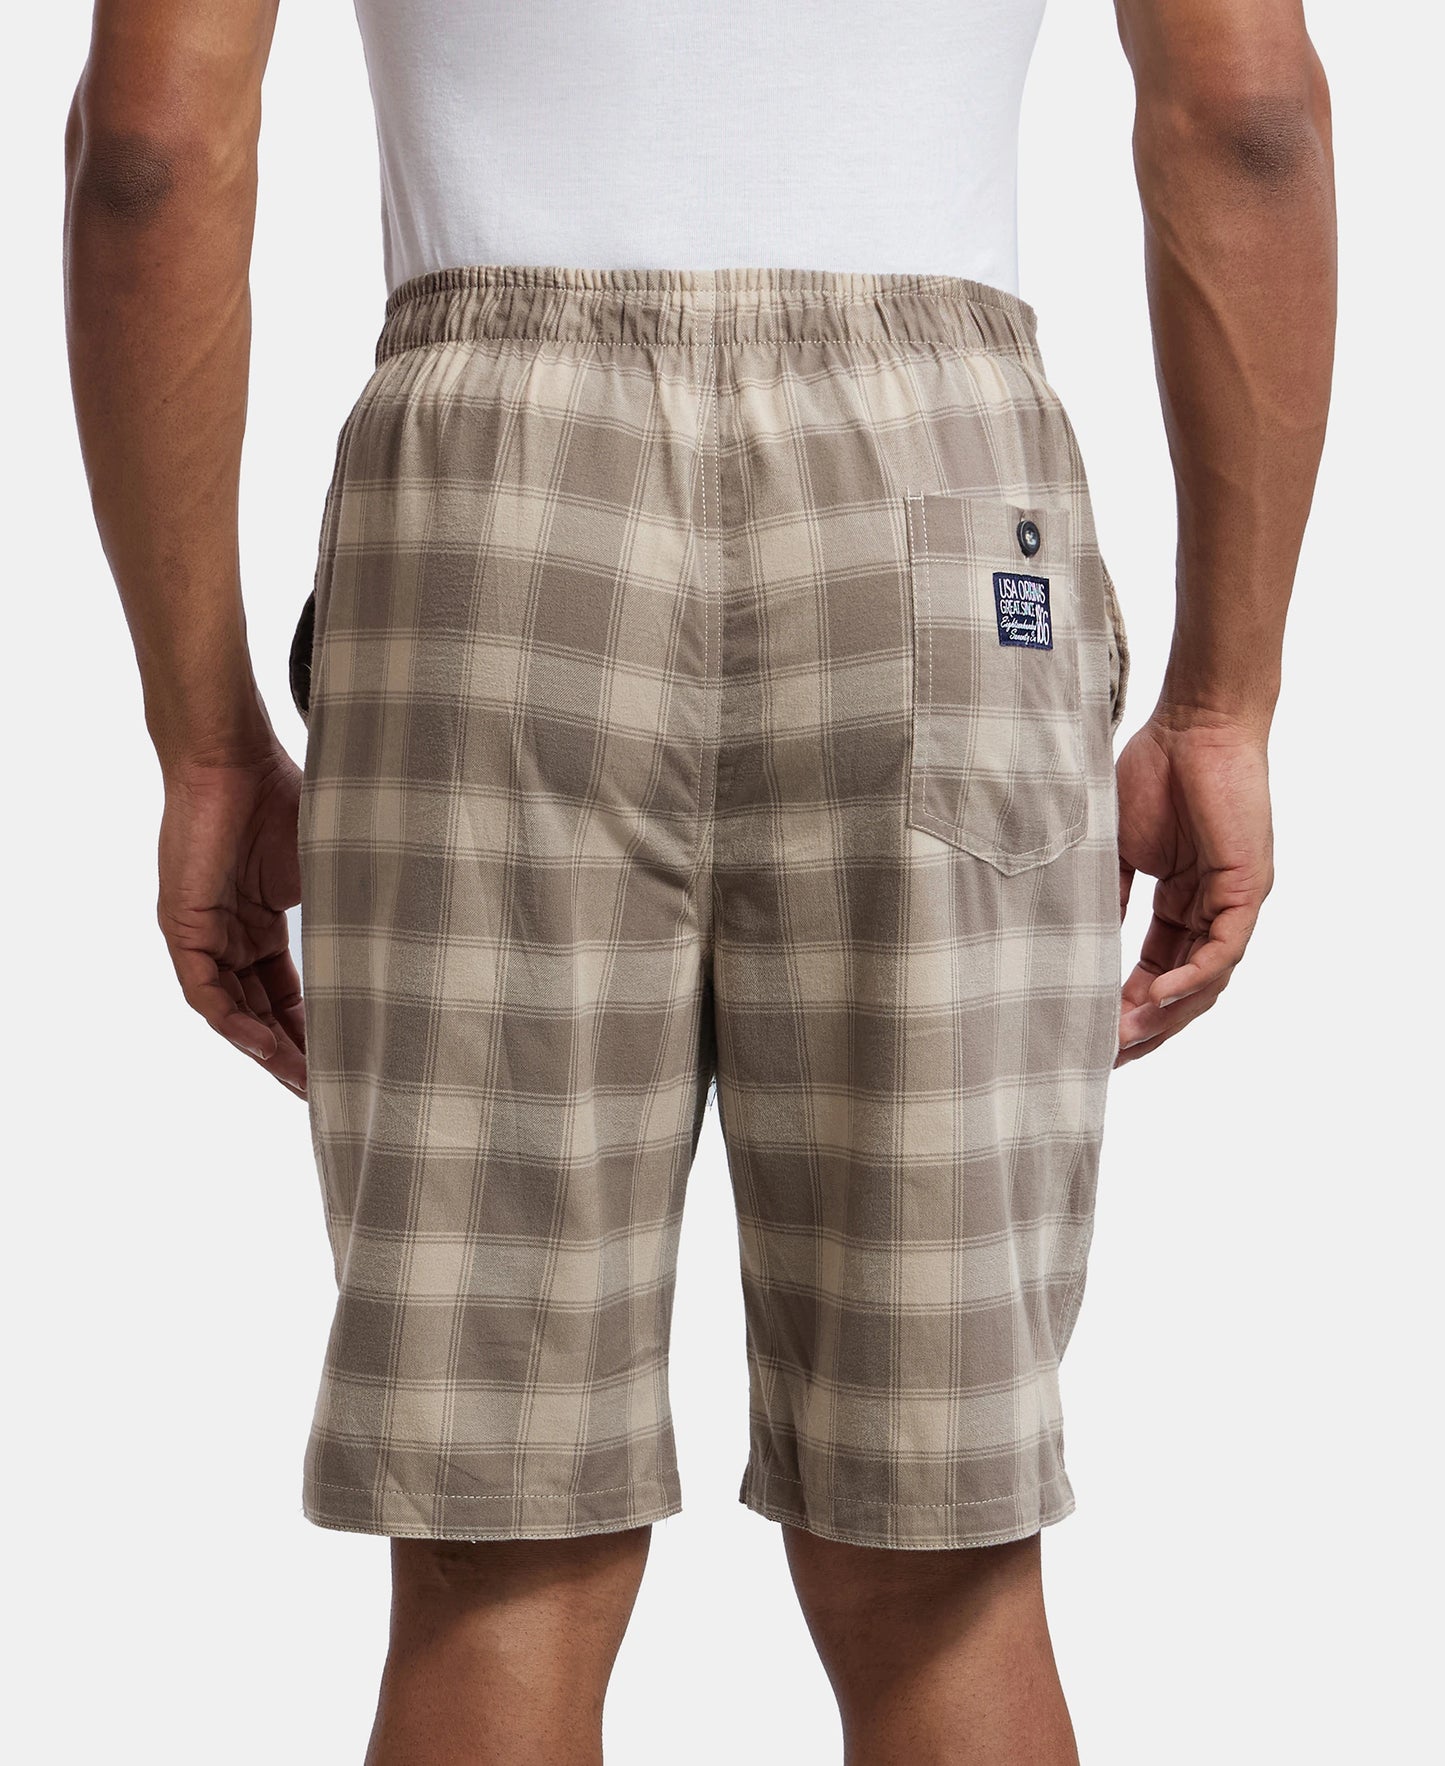 Super Combed Mercerized Cotton Woven Fabric Bermuda with Side Pockets - Khaki & Dark Khaki-3